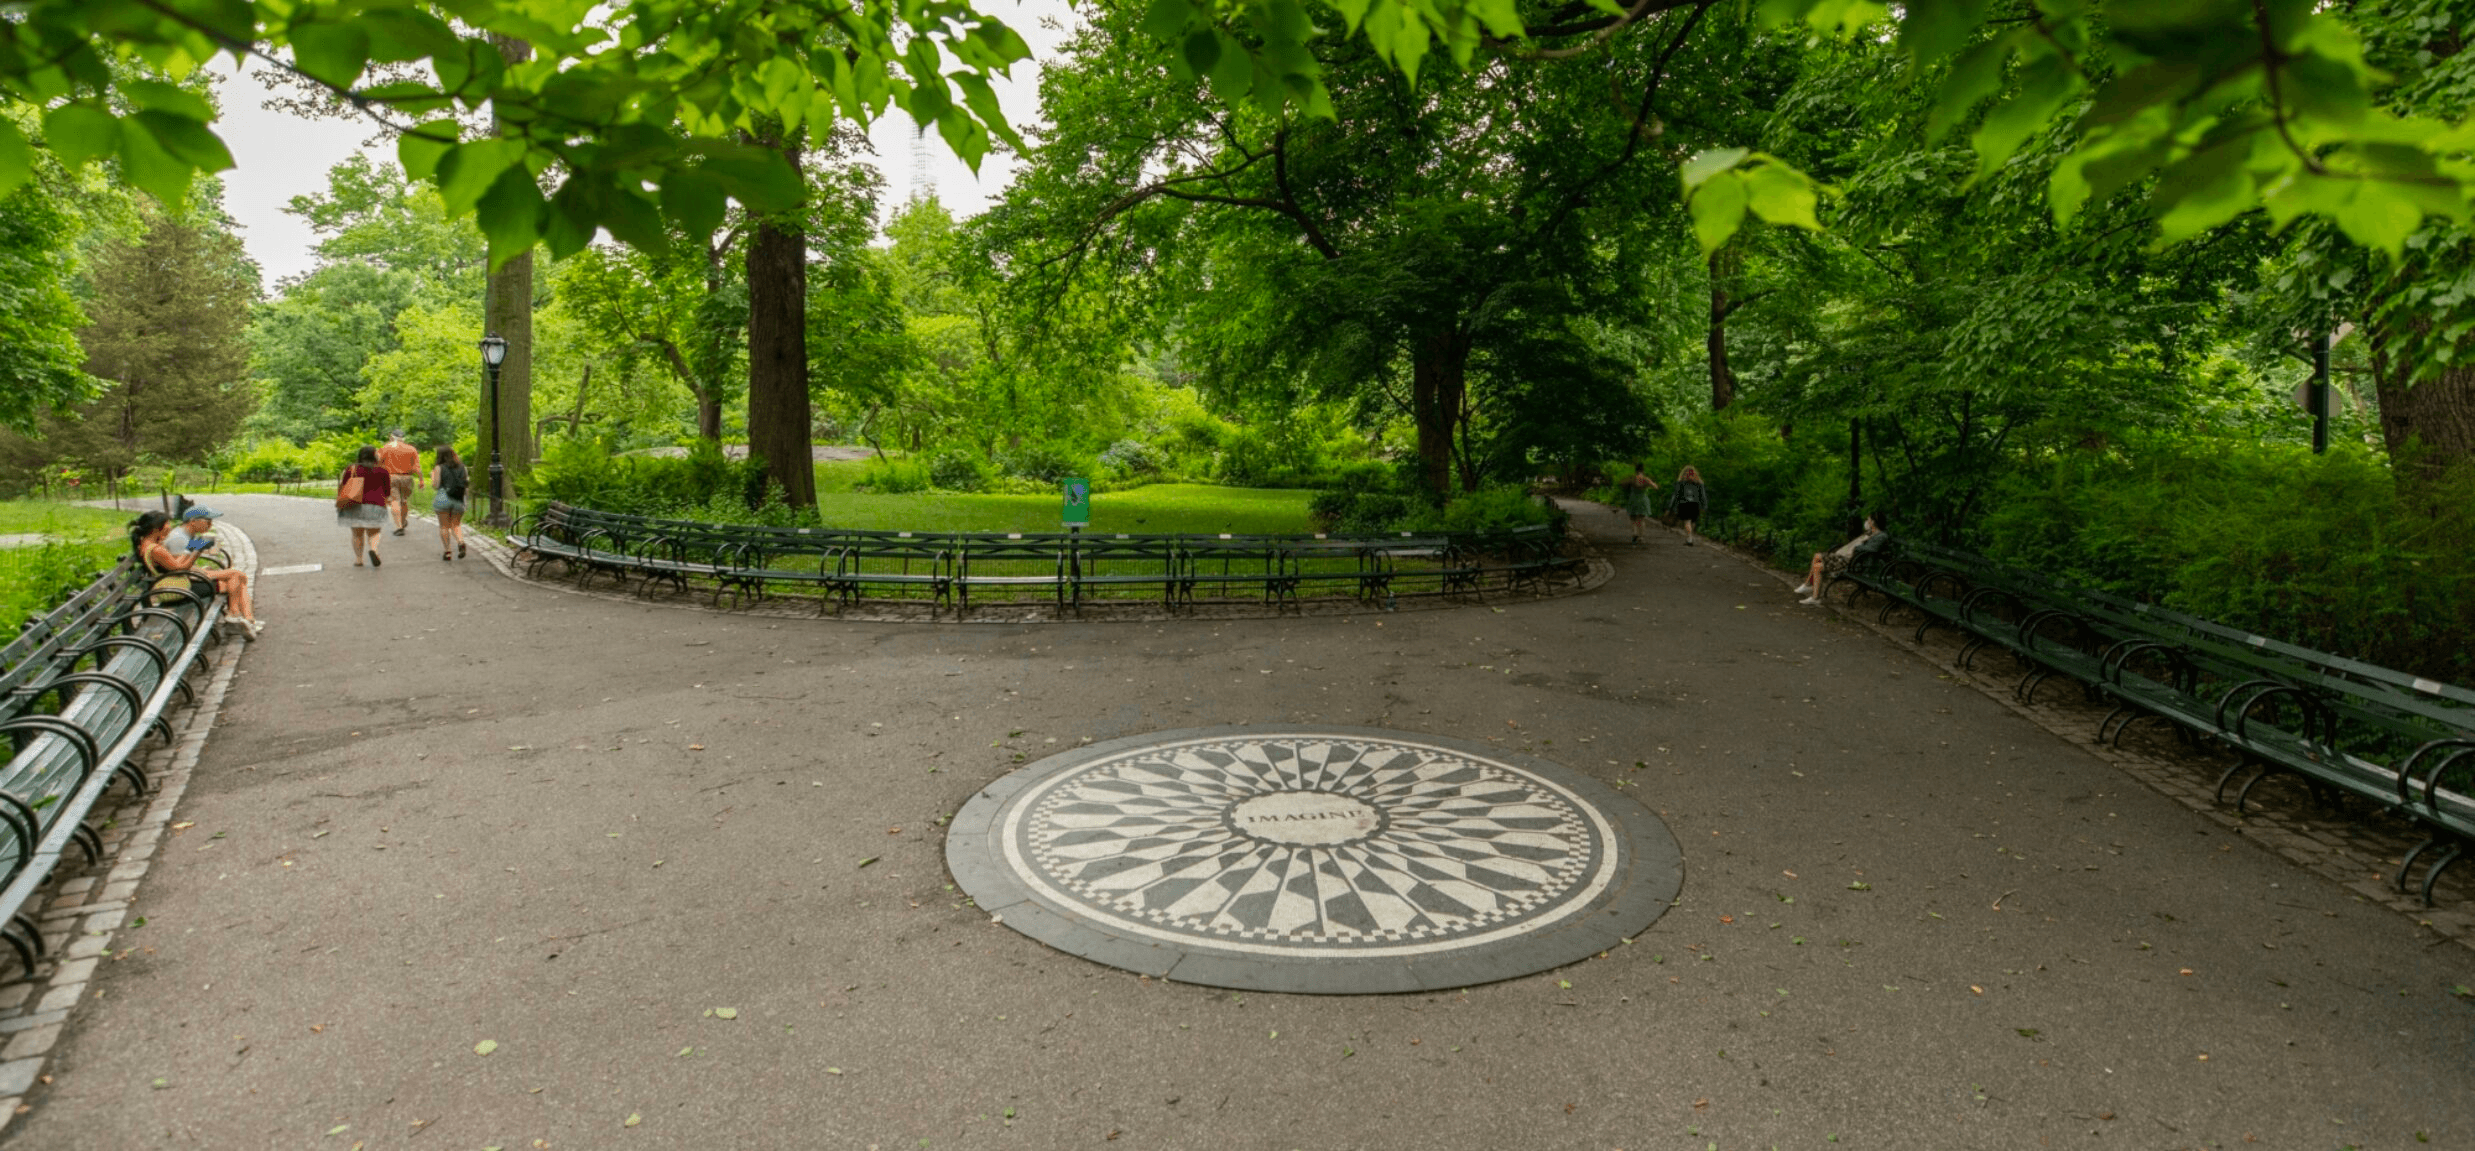 Source: Central Park Conservancy